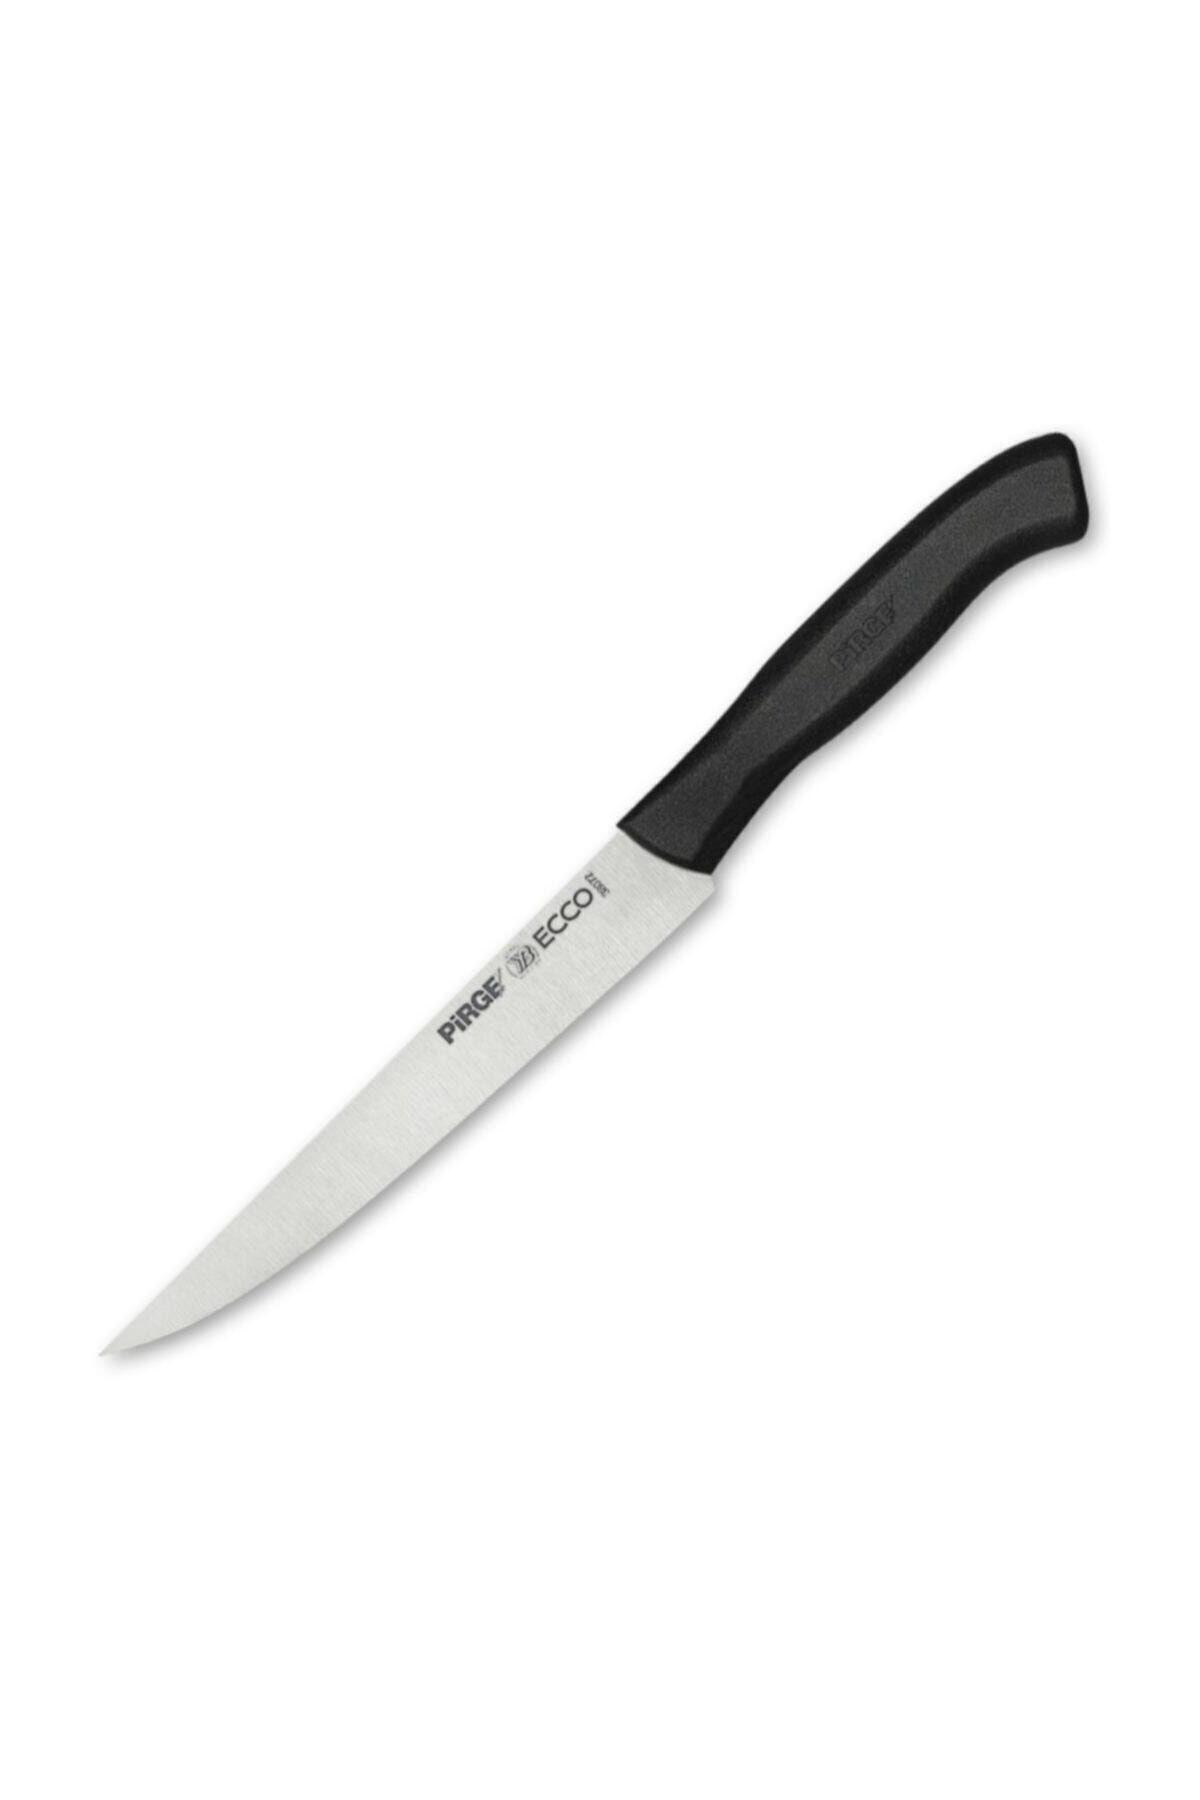 Pirge 38072 Ecco Peynir Bıçağı 17.5 Cm Esnek